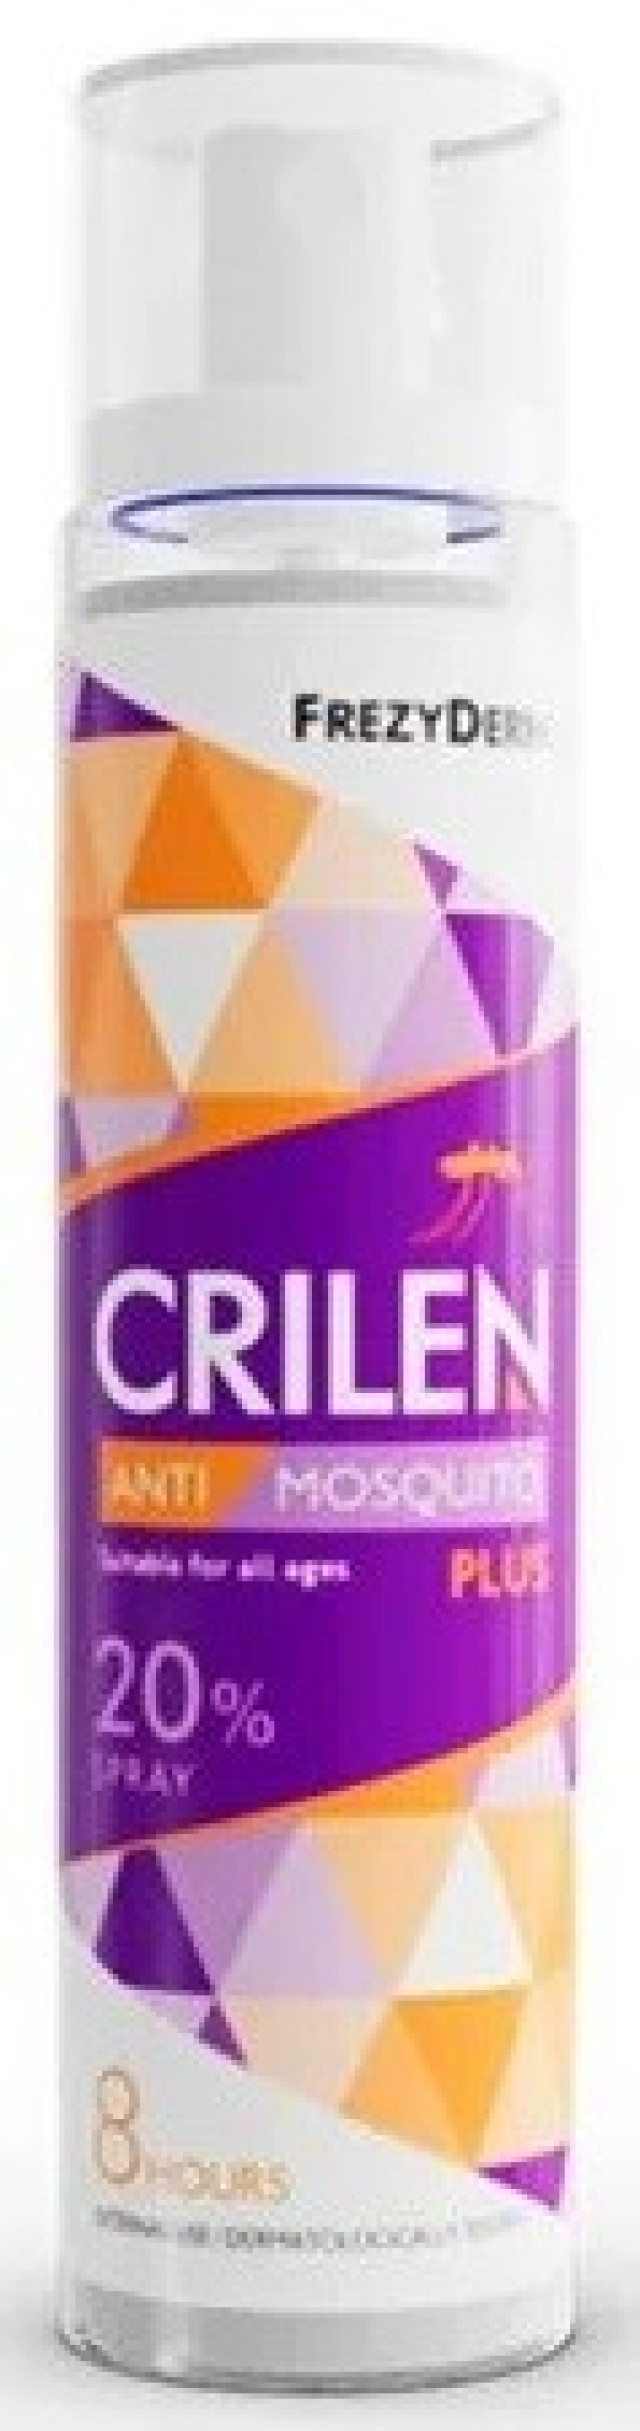 FrezyDerm Crilen Anti-Mosquito Plus 20% Εντομοαπωθητικό Spray για Προστασία από Κουνούπια 100ml